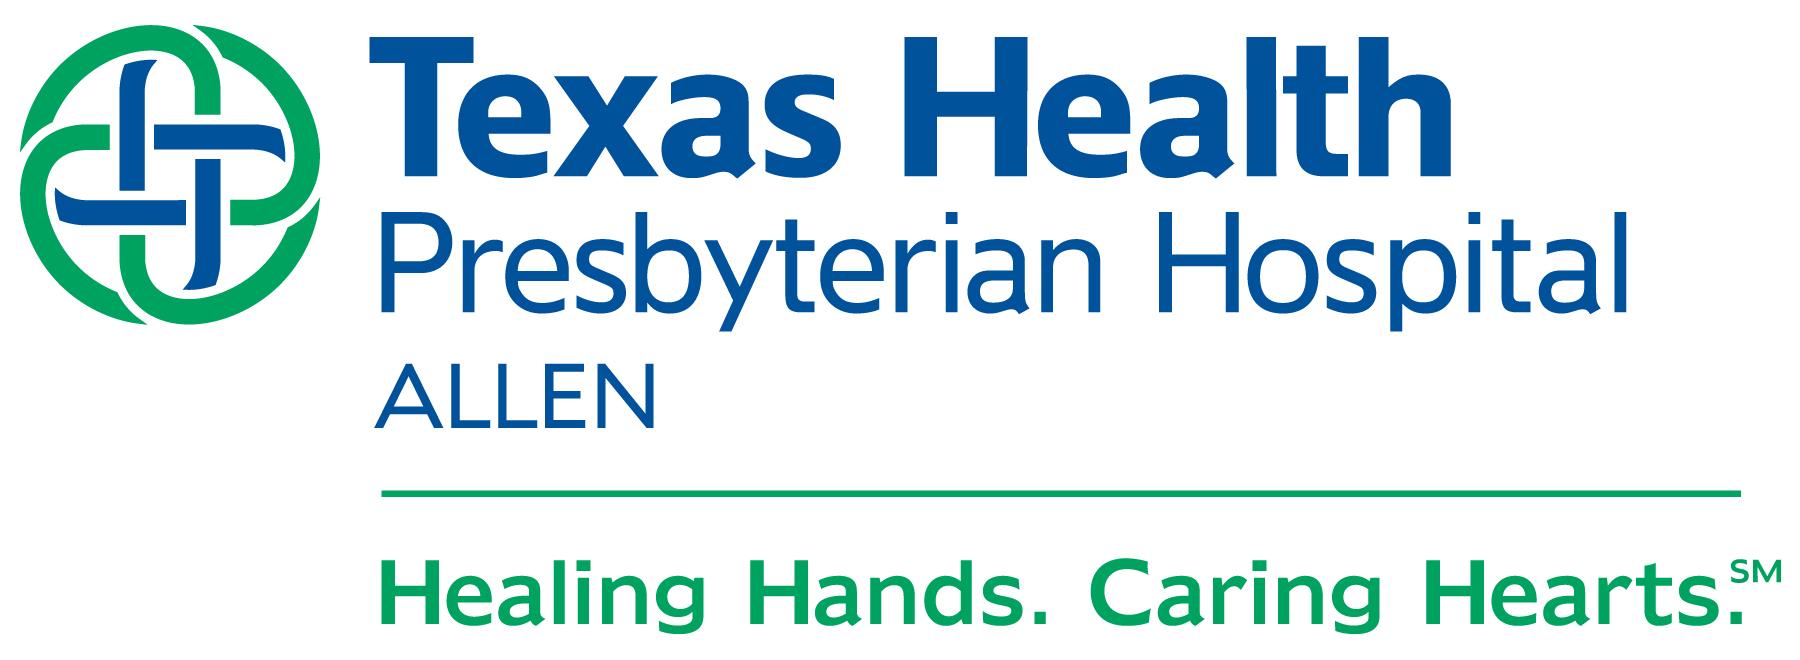 Texas Health Presbyterian Hospital Allen